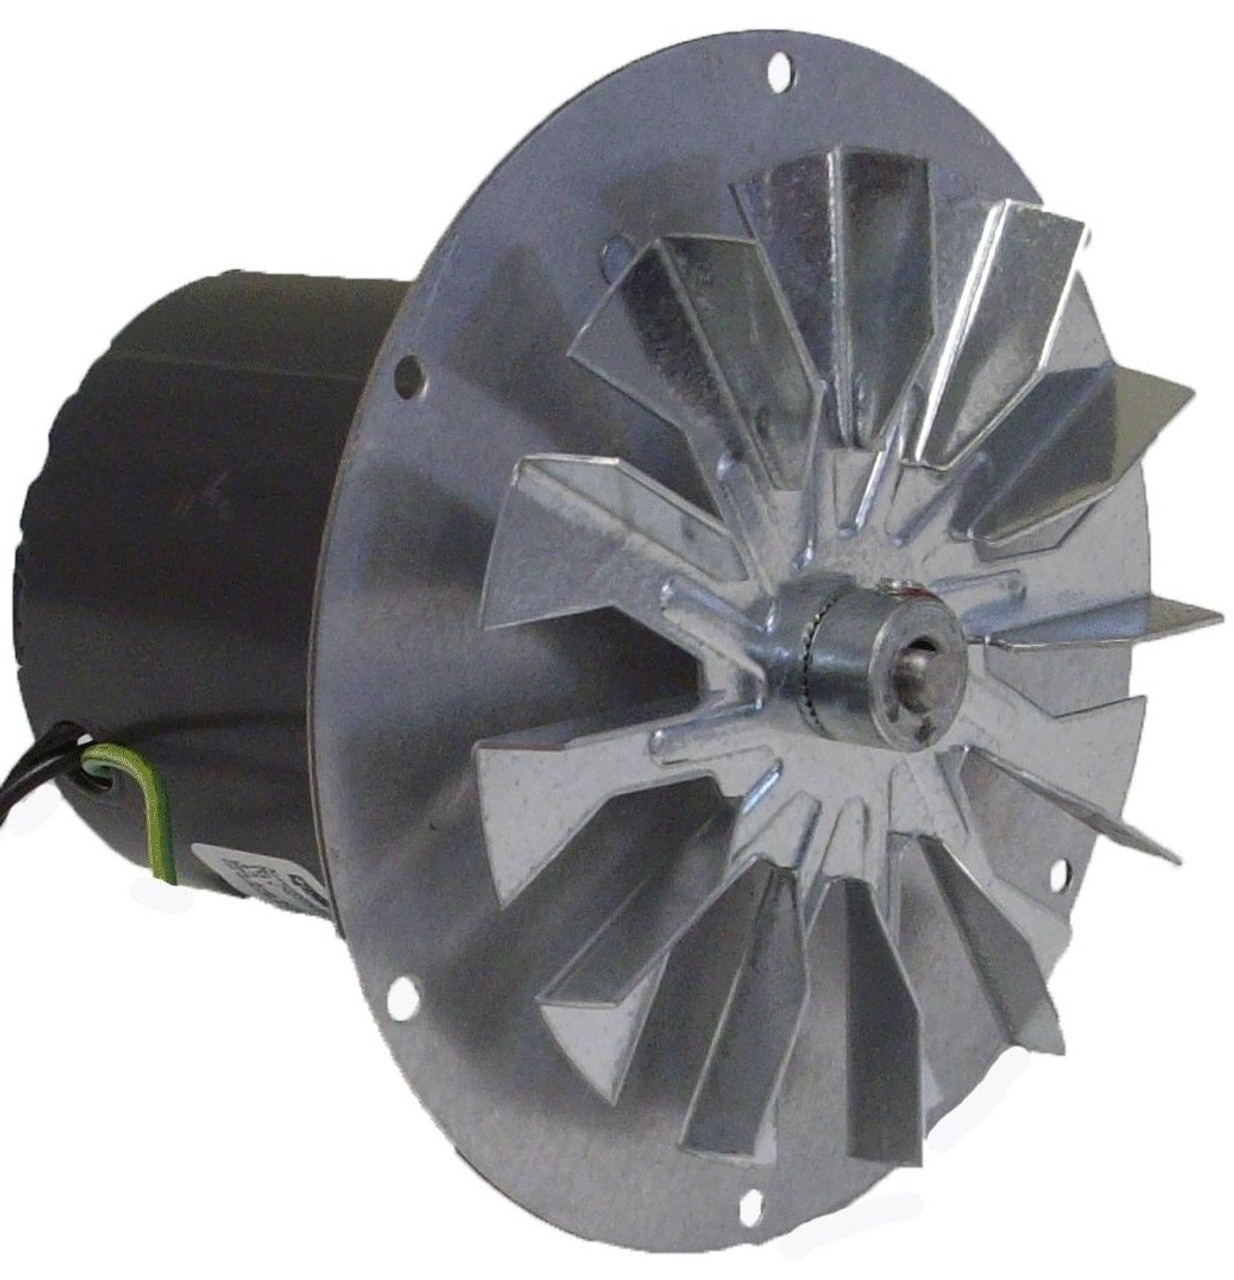 Rotom HB-RBM120 Pellet Stove Blower Motor Replacement 1/60 hp HB-RBM120 115V Rotom 0.3 Amp. 3000 rpm